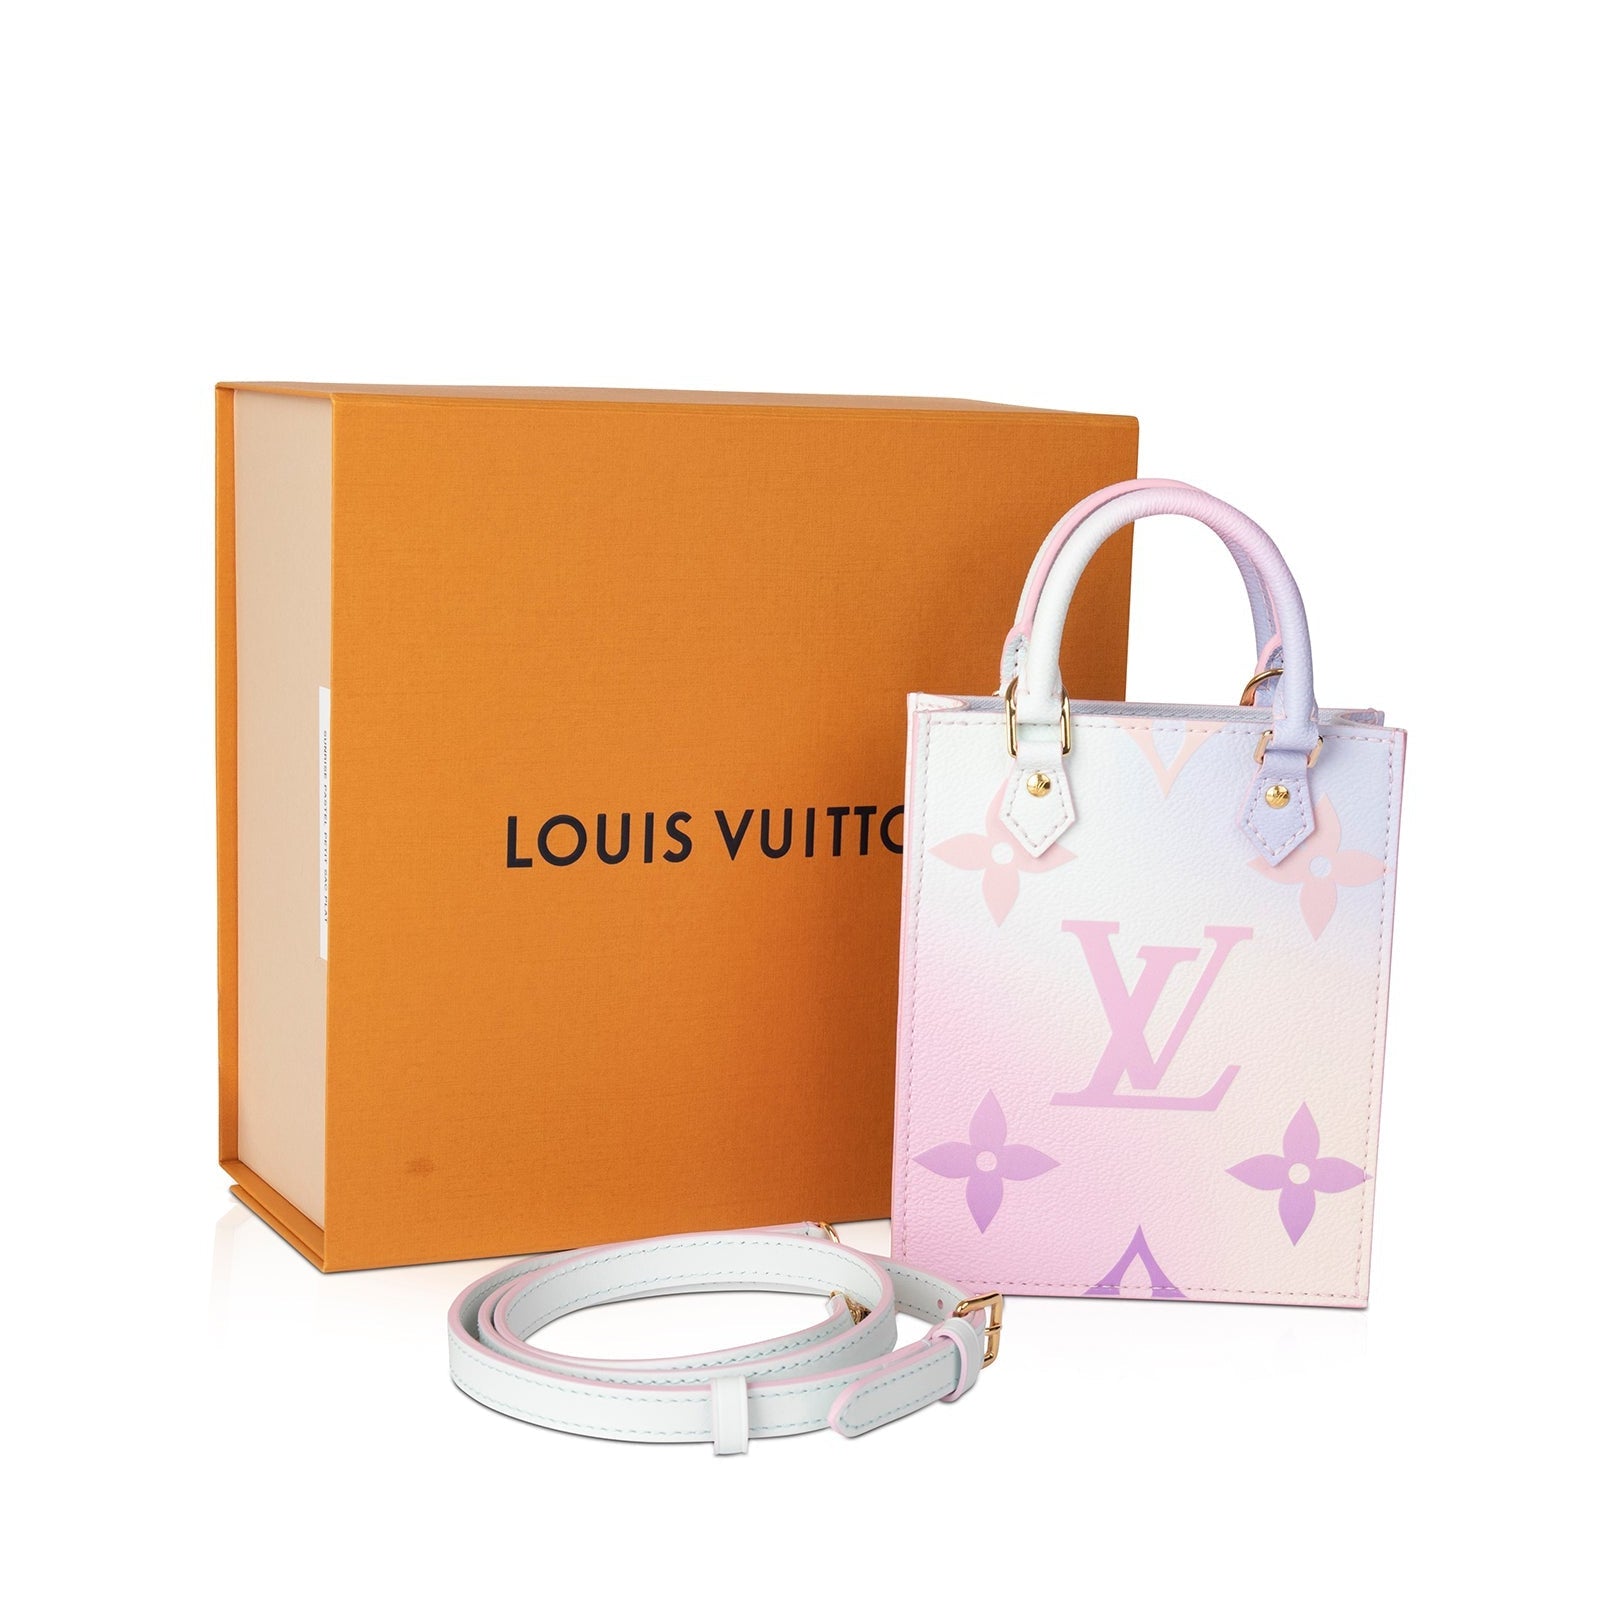 Louis Vuitton Petit Sac Plat Sunrise Pastel in Coated Canvas